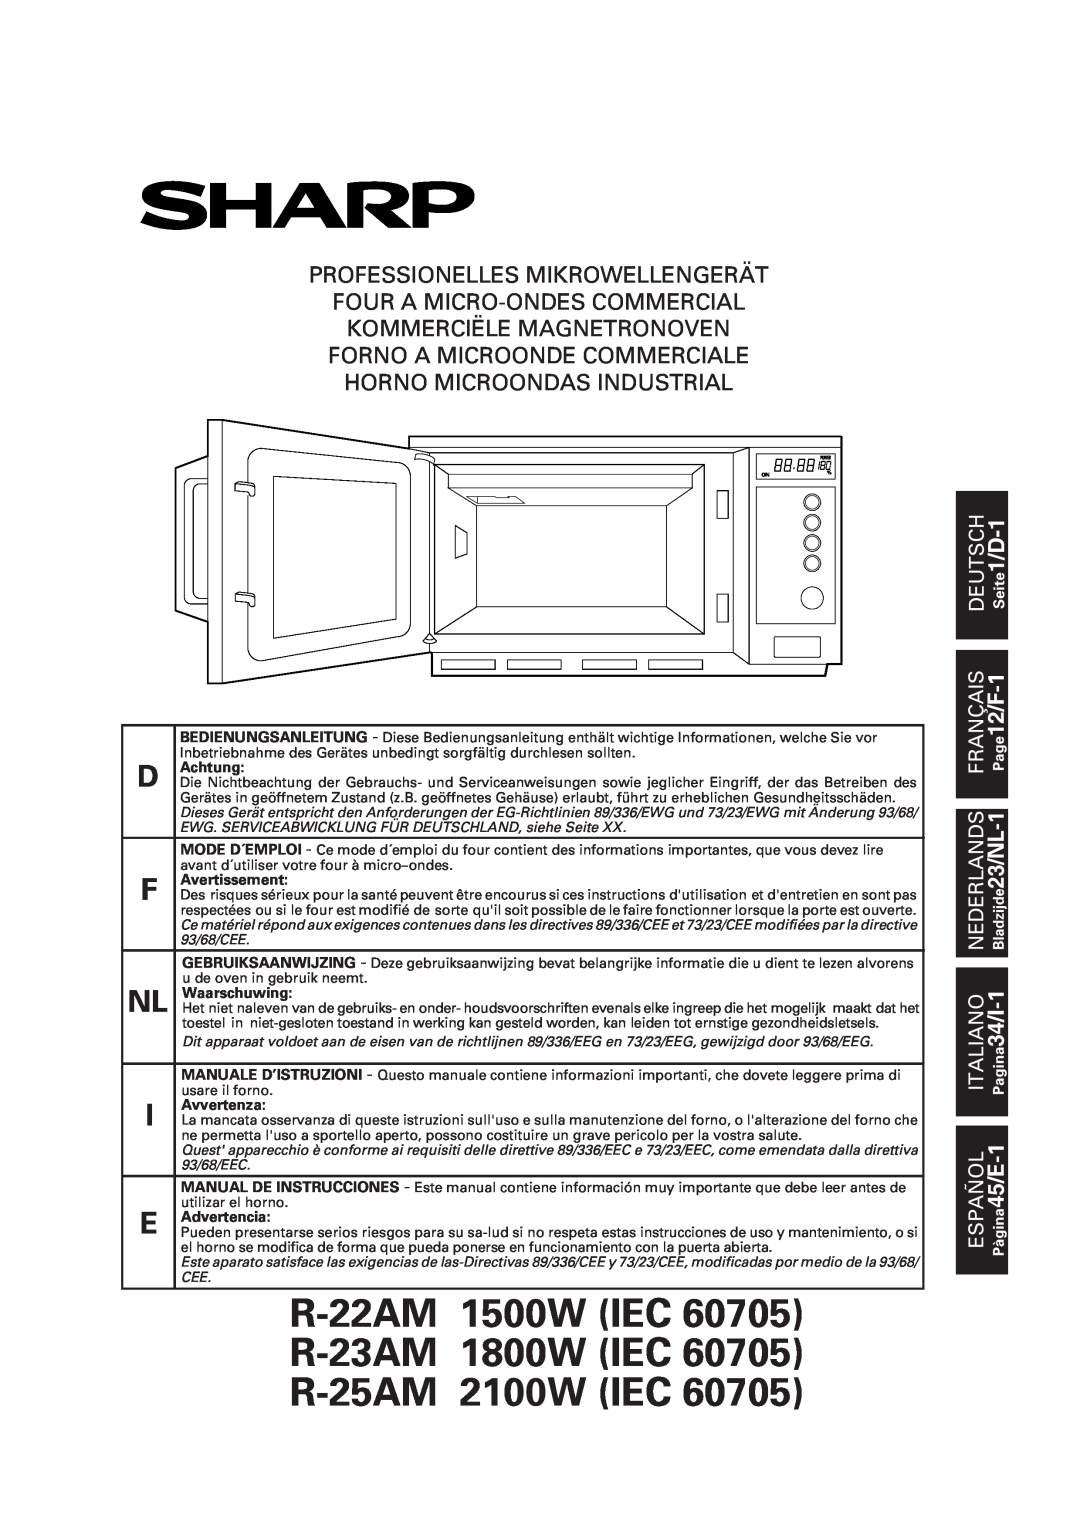 Sharp R-25AM manual Professionelles Mikrowellengerät, Four A Micro-Ondescommercial, Kommerciële Magnetronoven, Achtung 